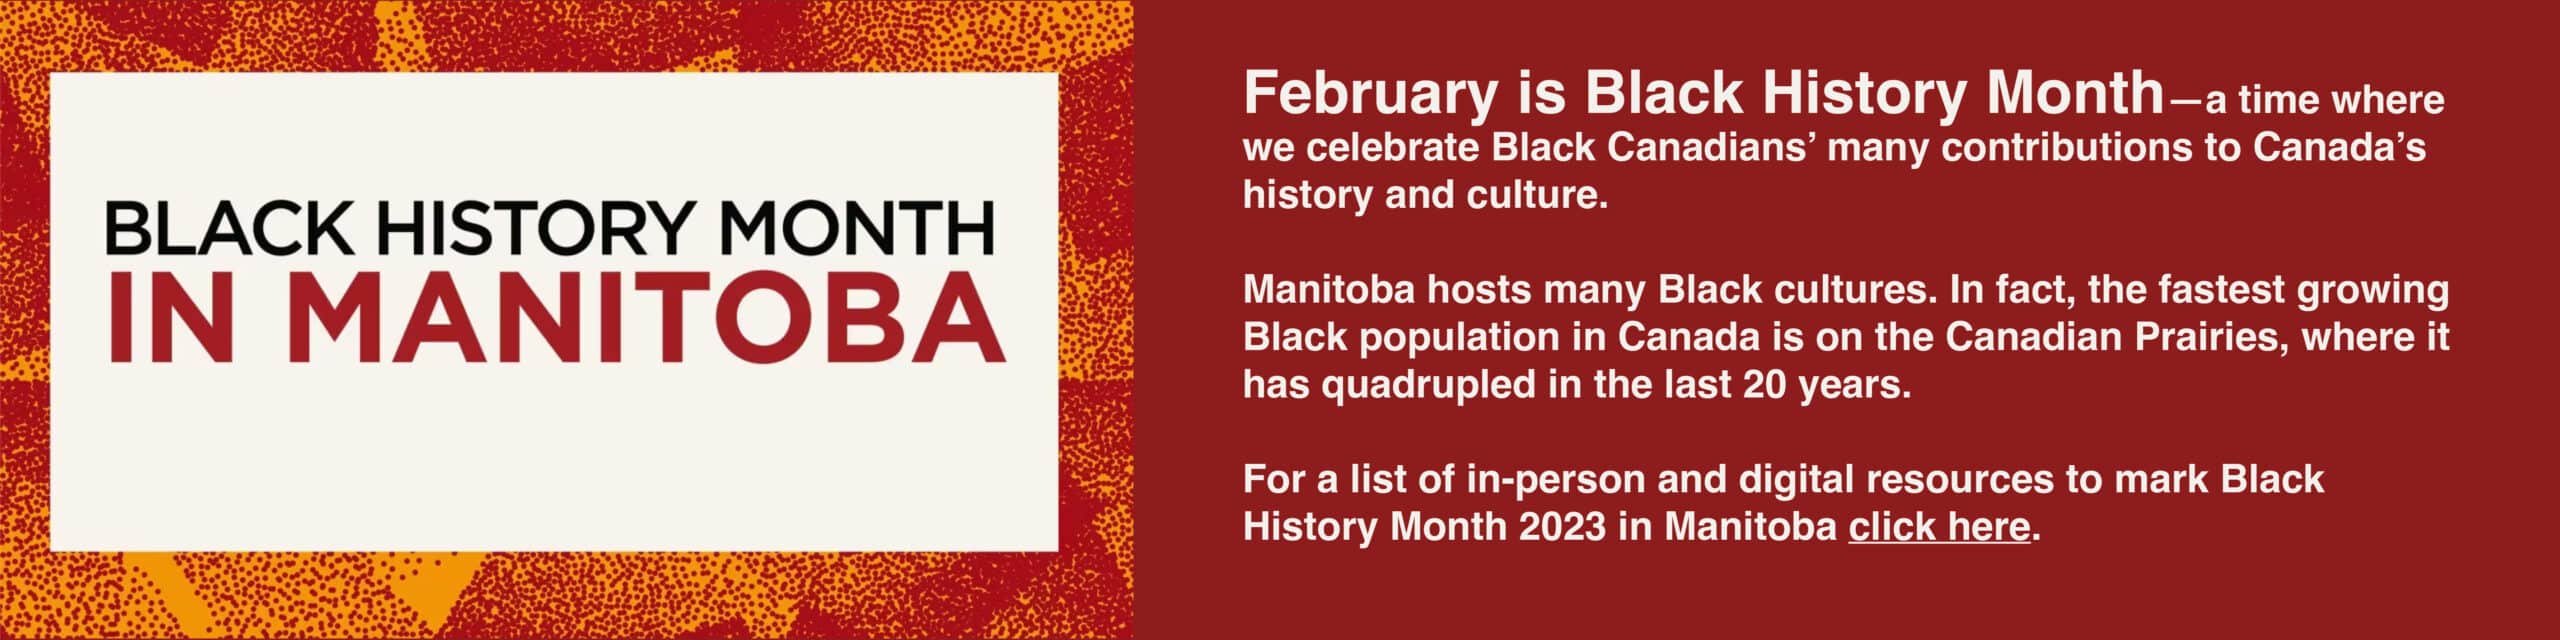 Banner Celebrating Black History Month